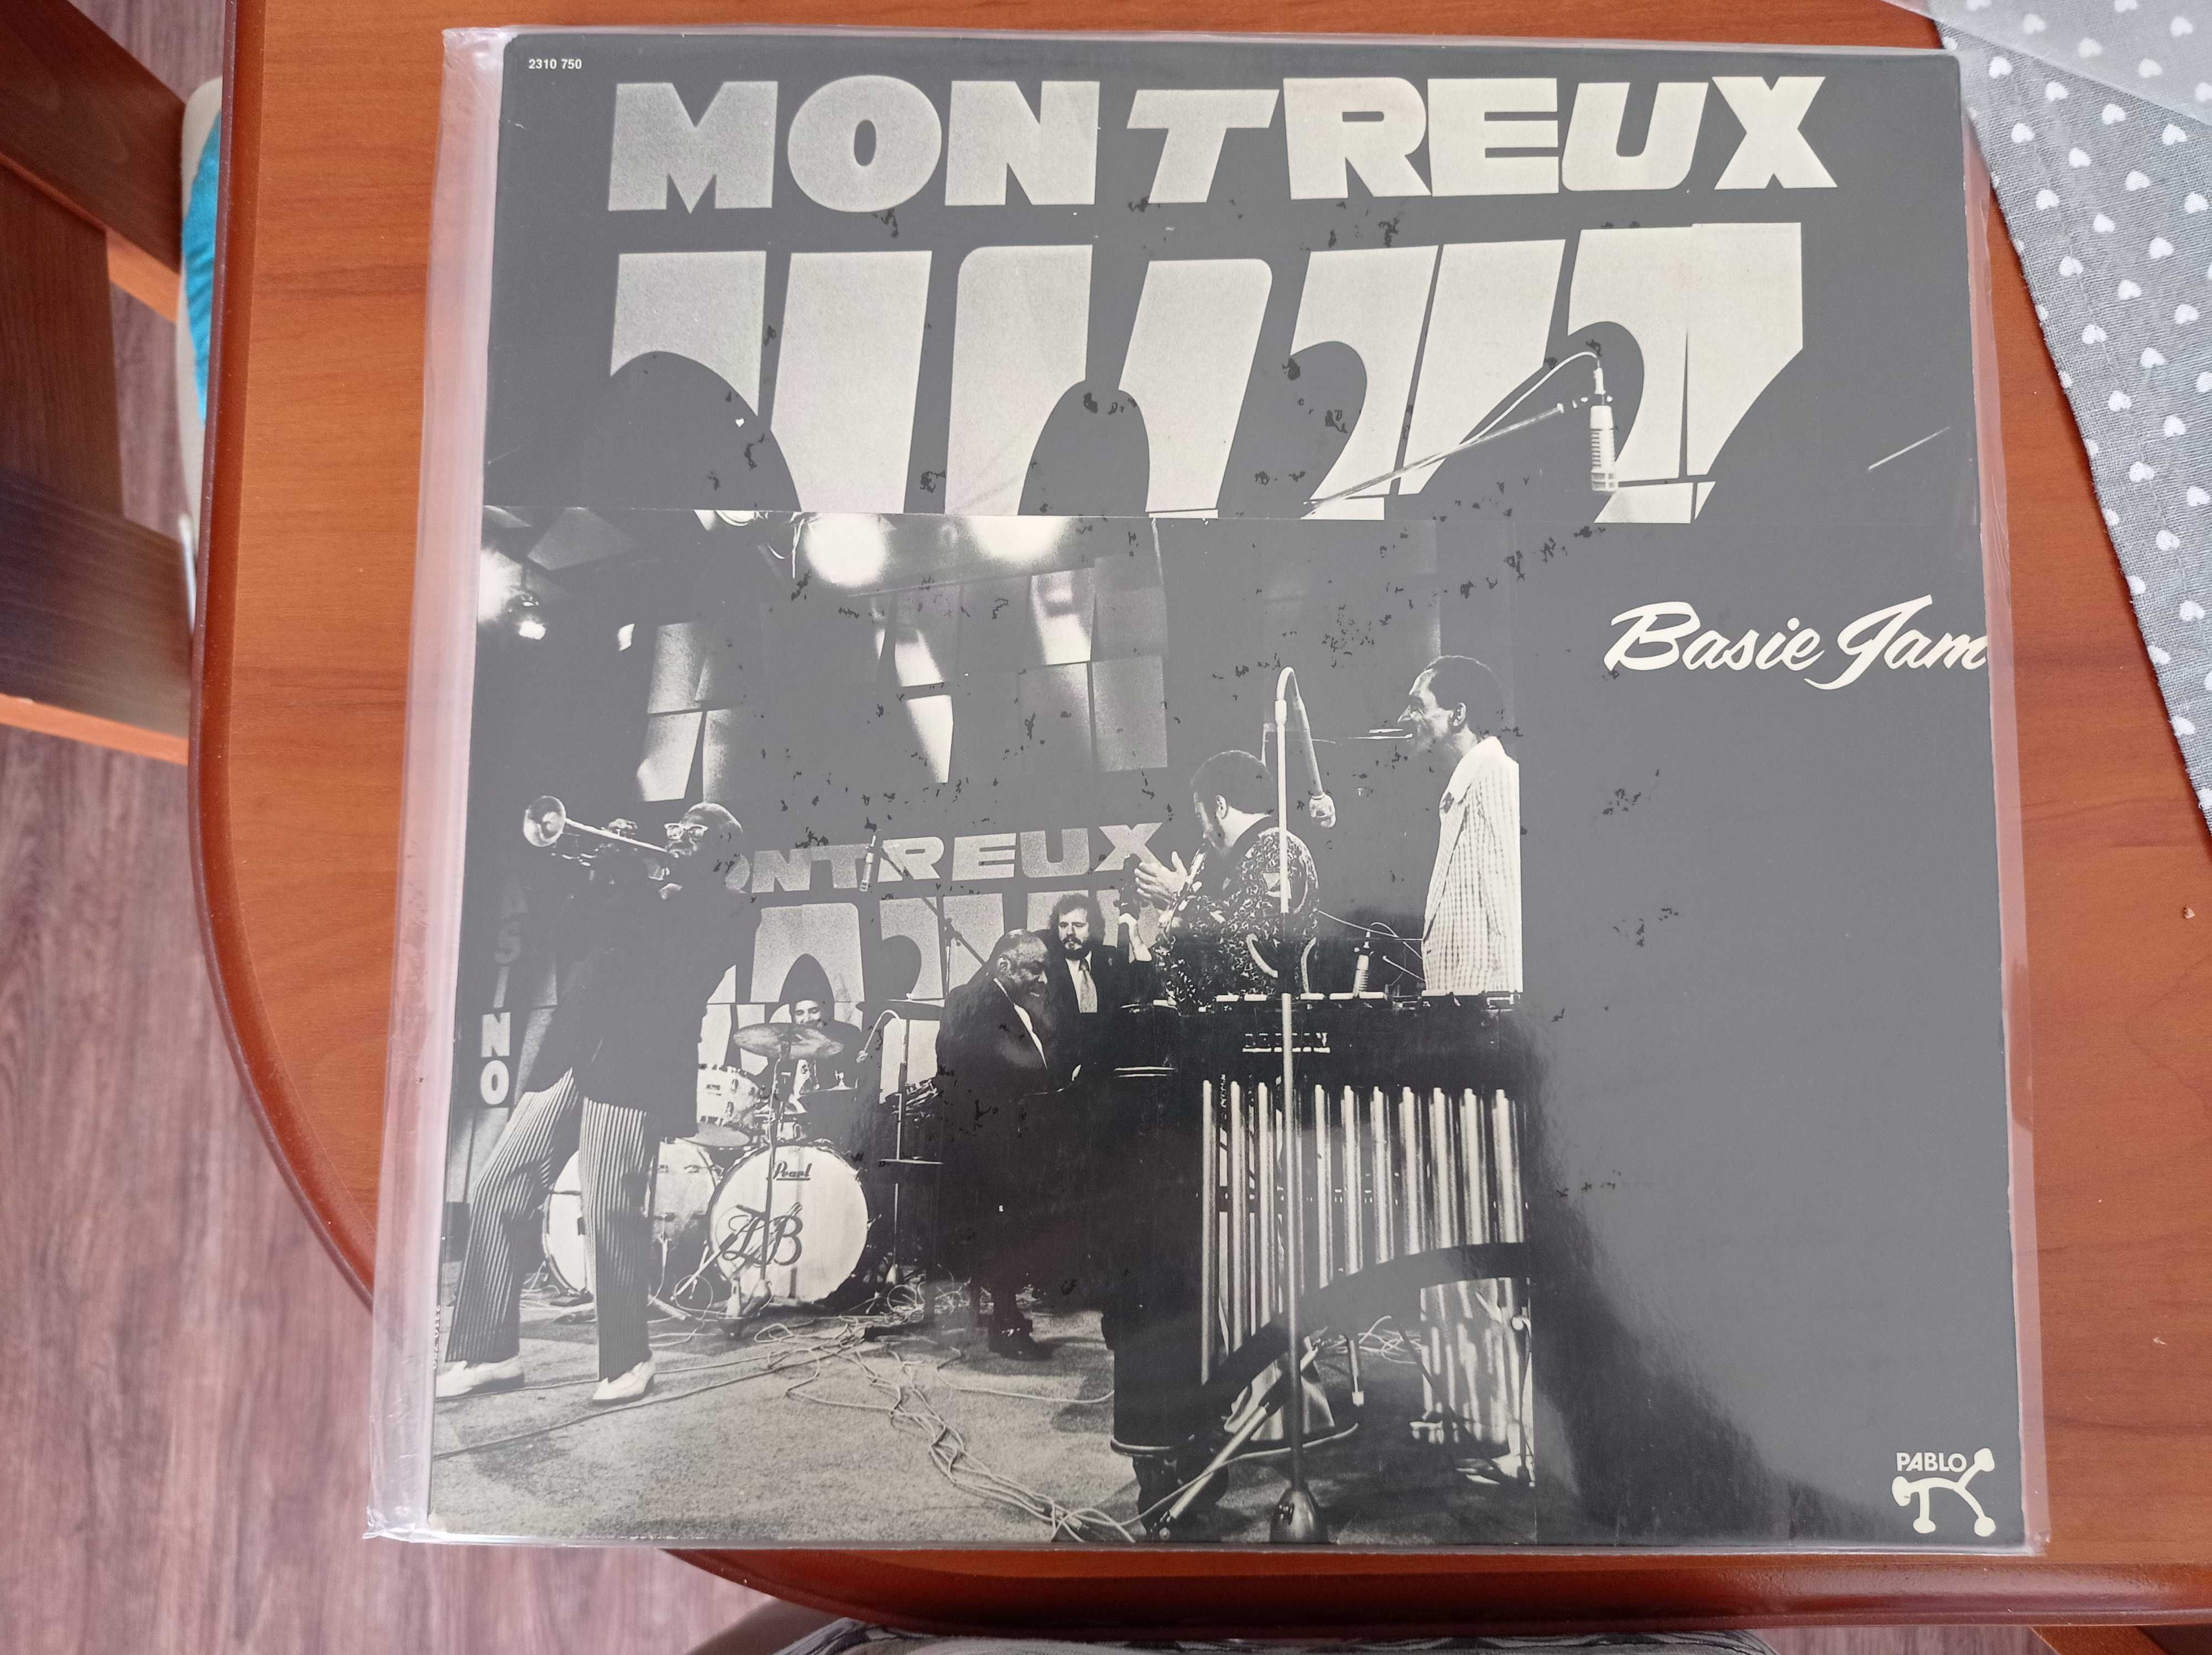 Montreux - Basie jam